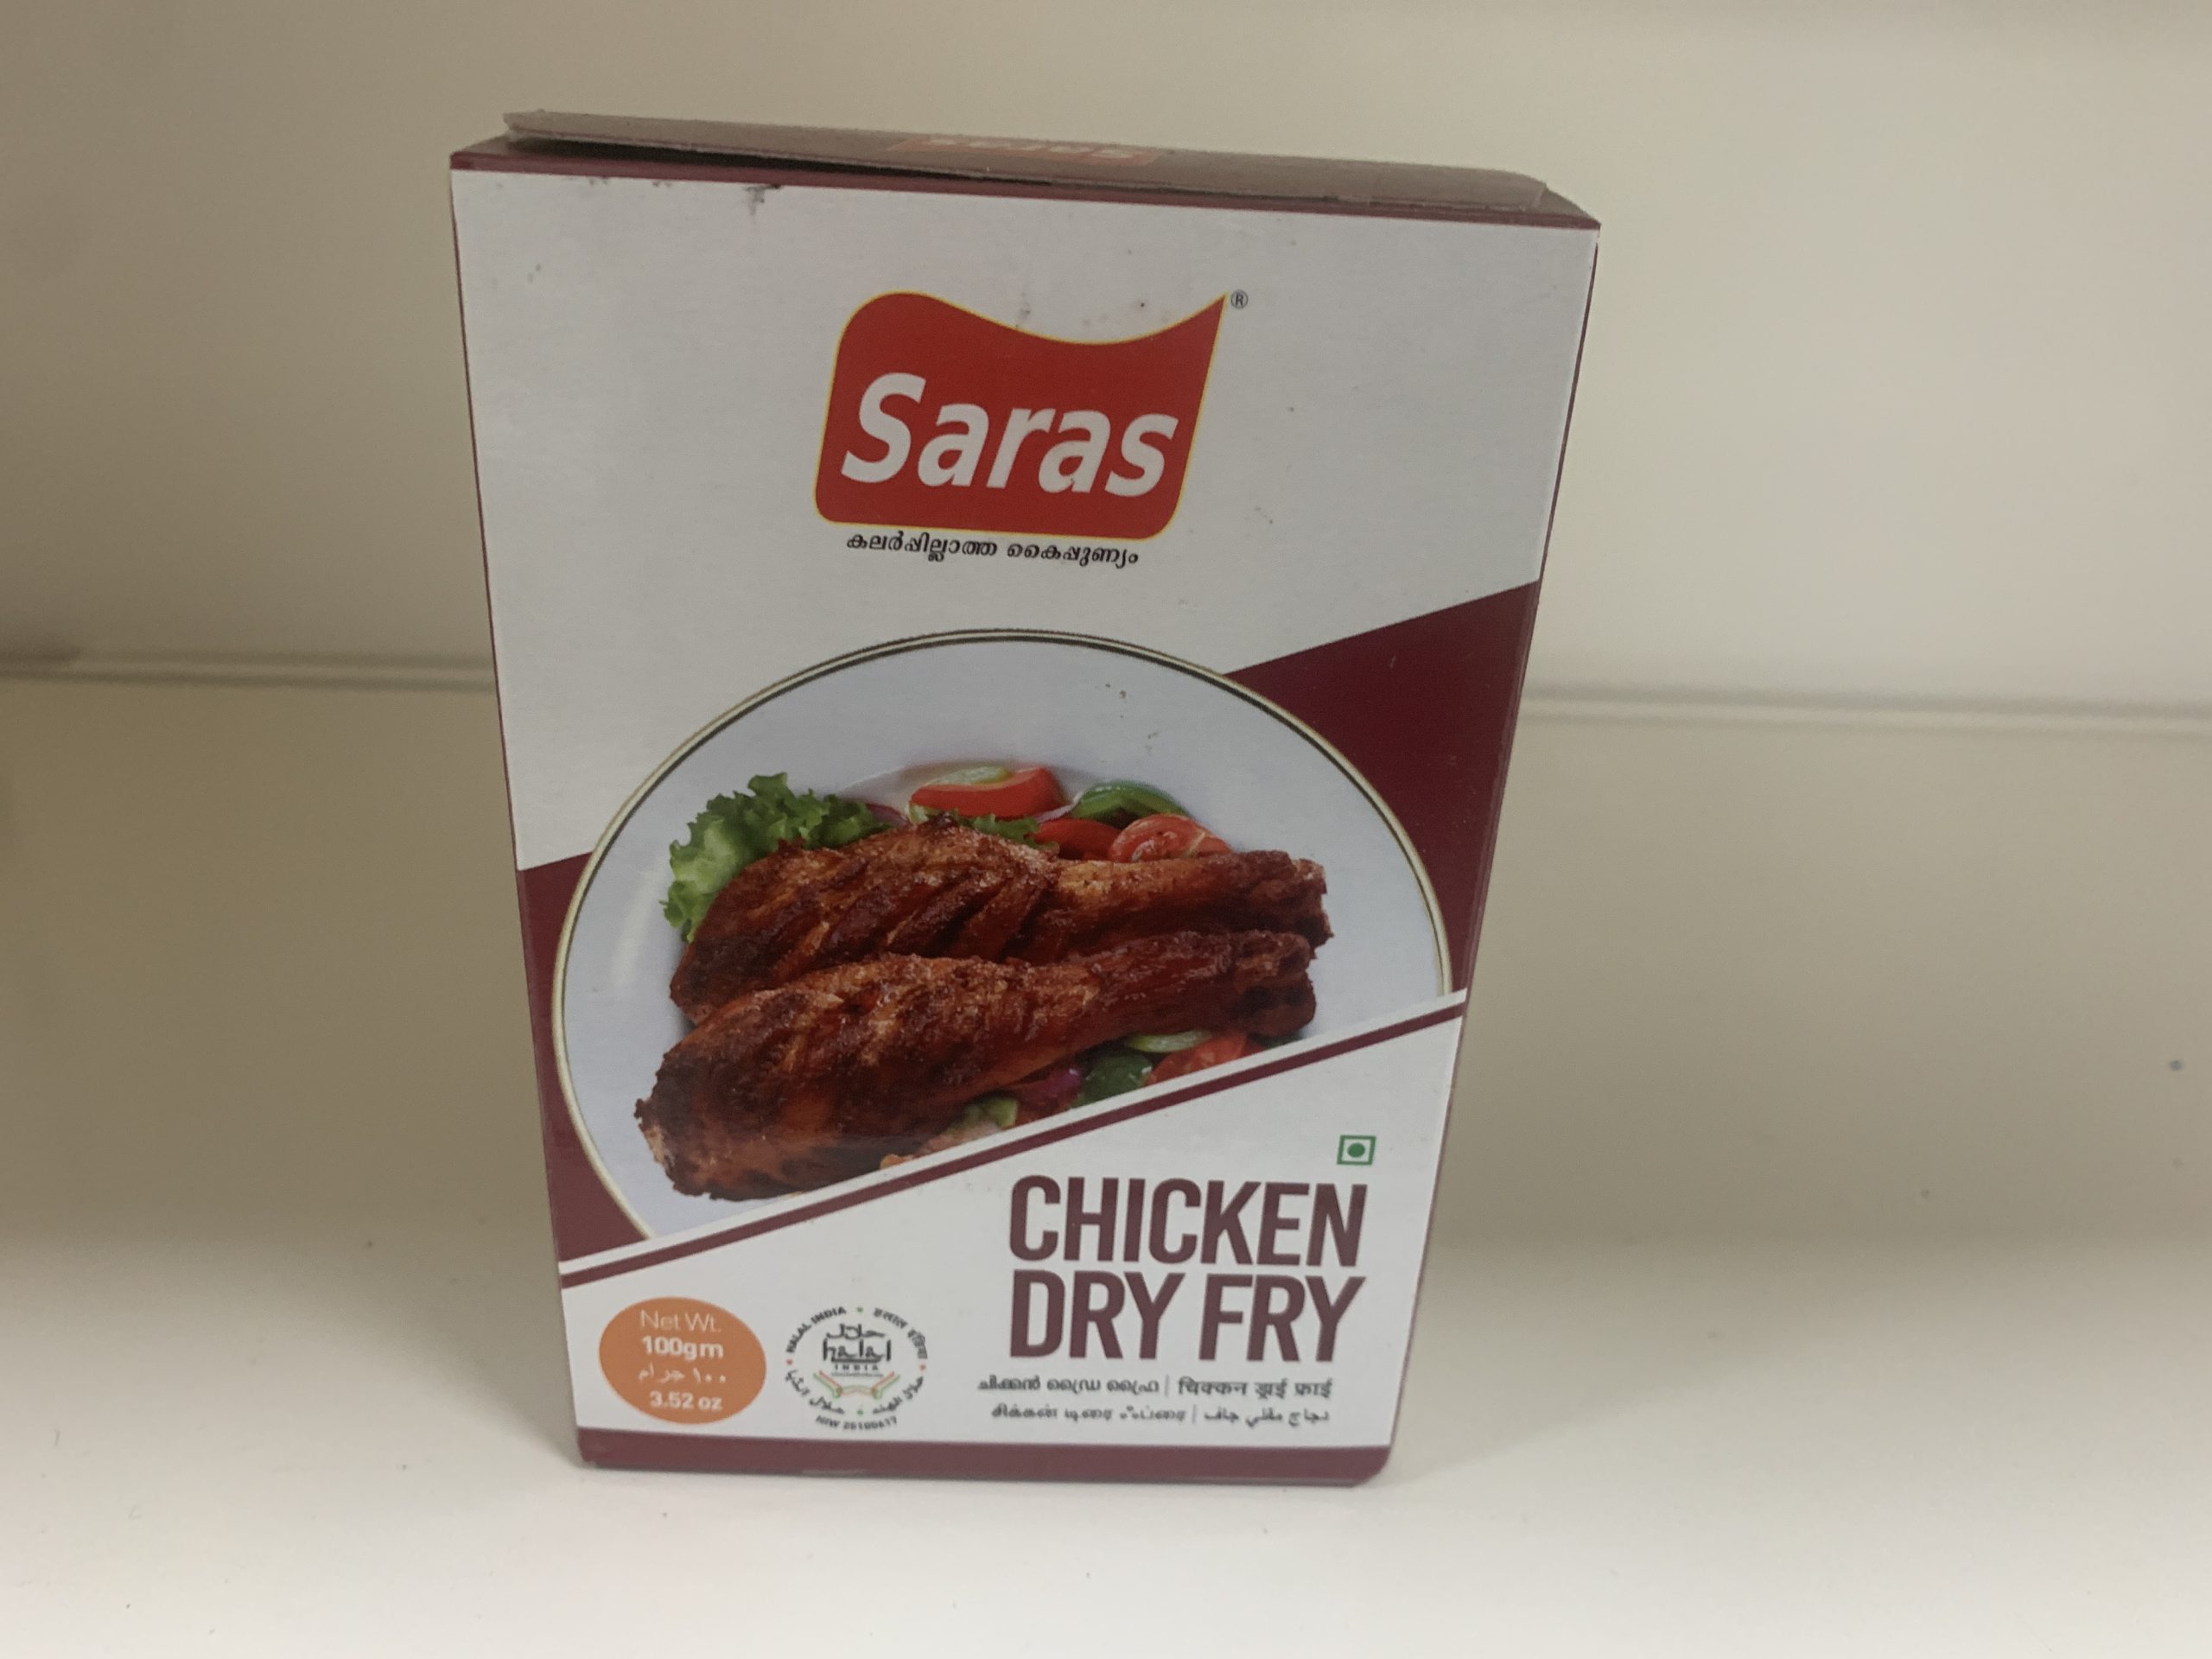 Saras chicken dry fry